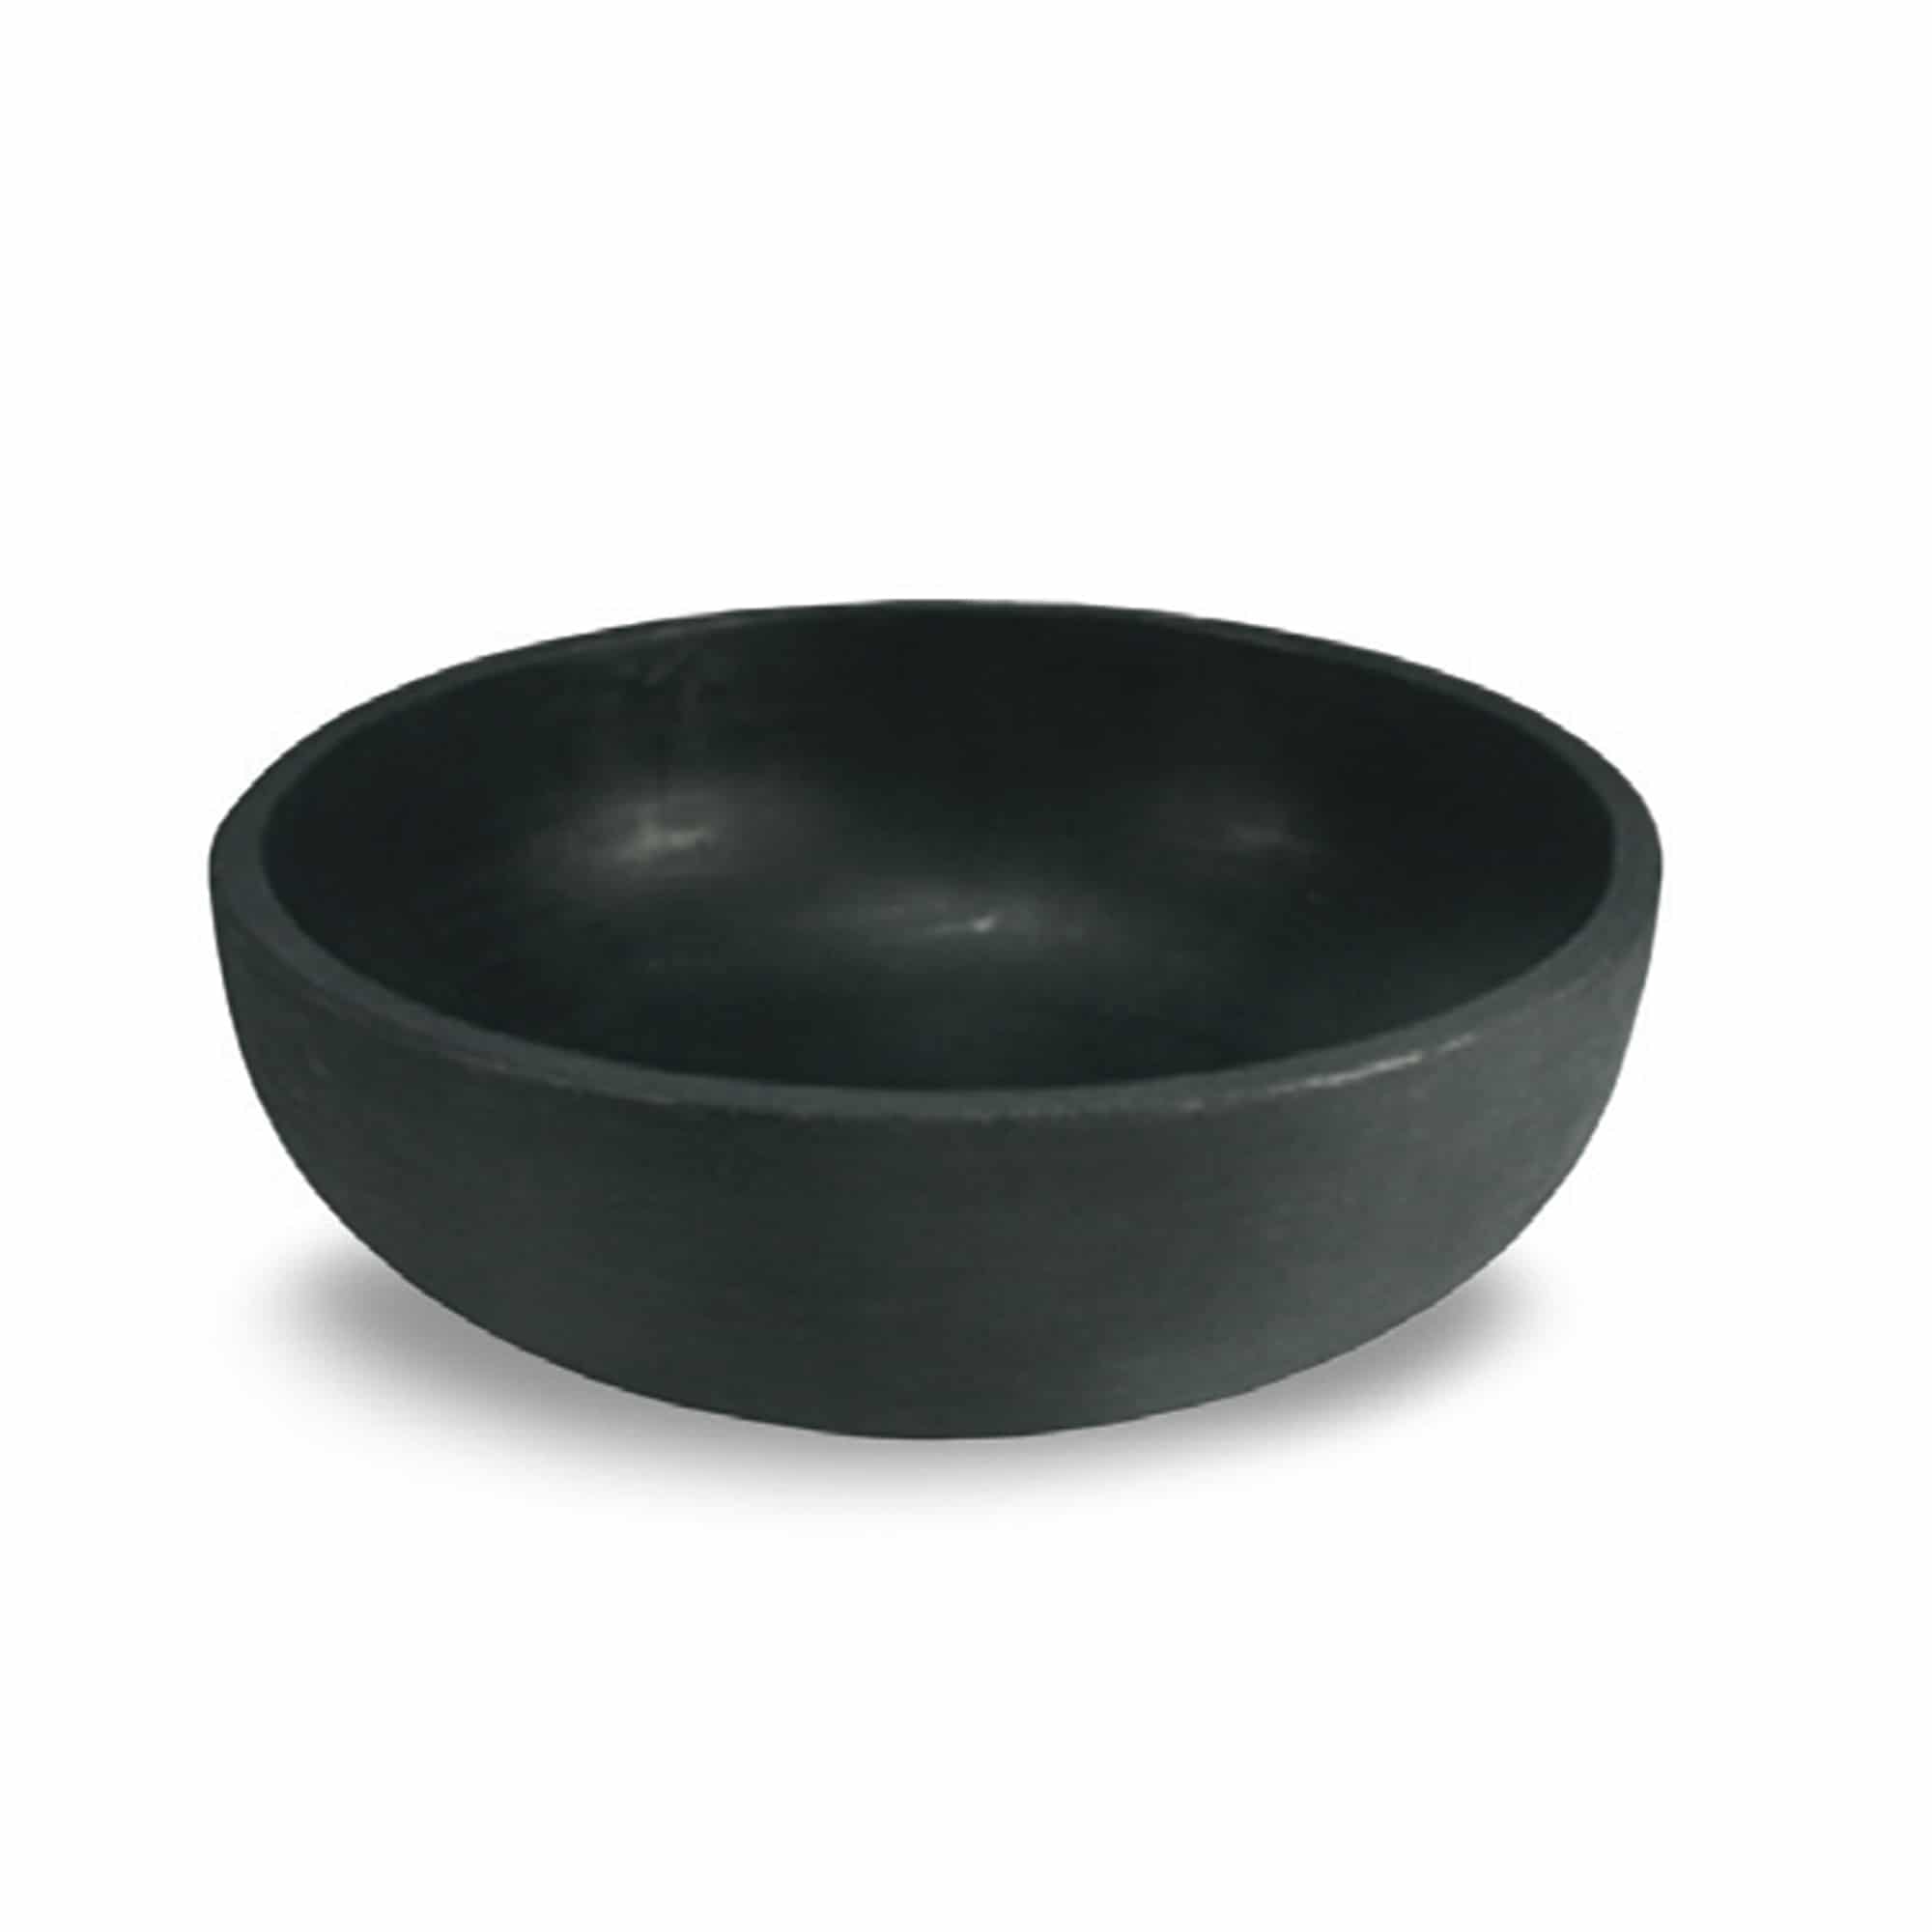 Orinoco Bowl in Caviar Black